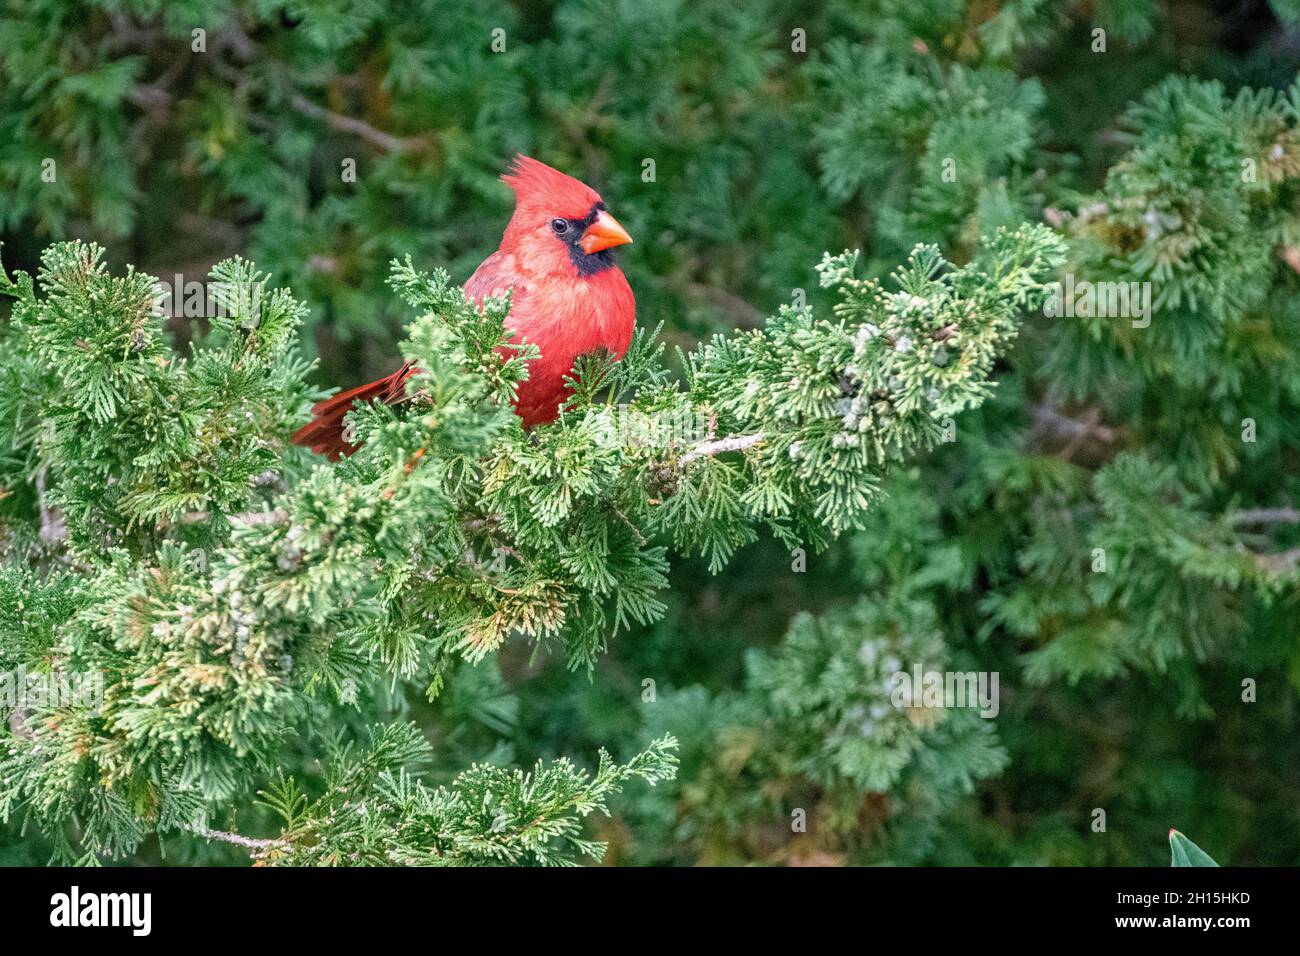 Northern Cardinal - American Cardinal - Cardinalis cardinalis in a pine tree - red bird / songbird perched on a branch Stock Photo